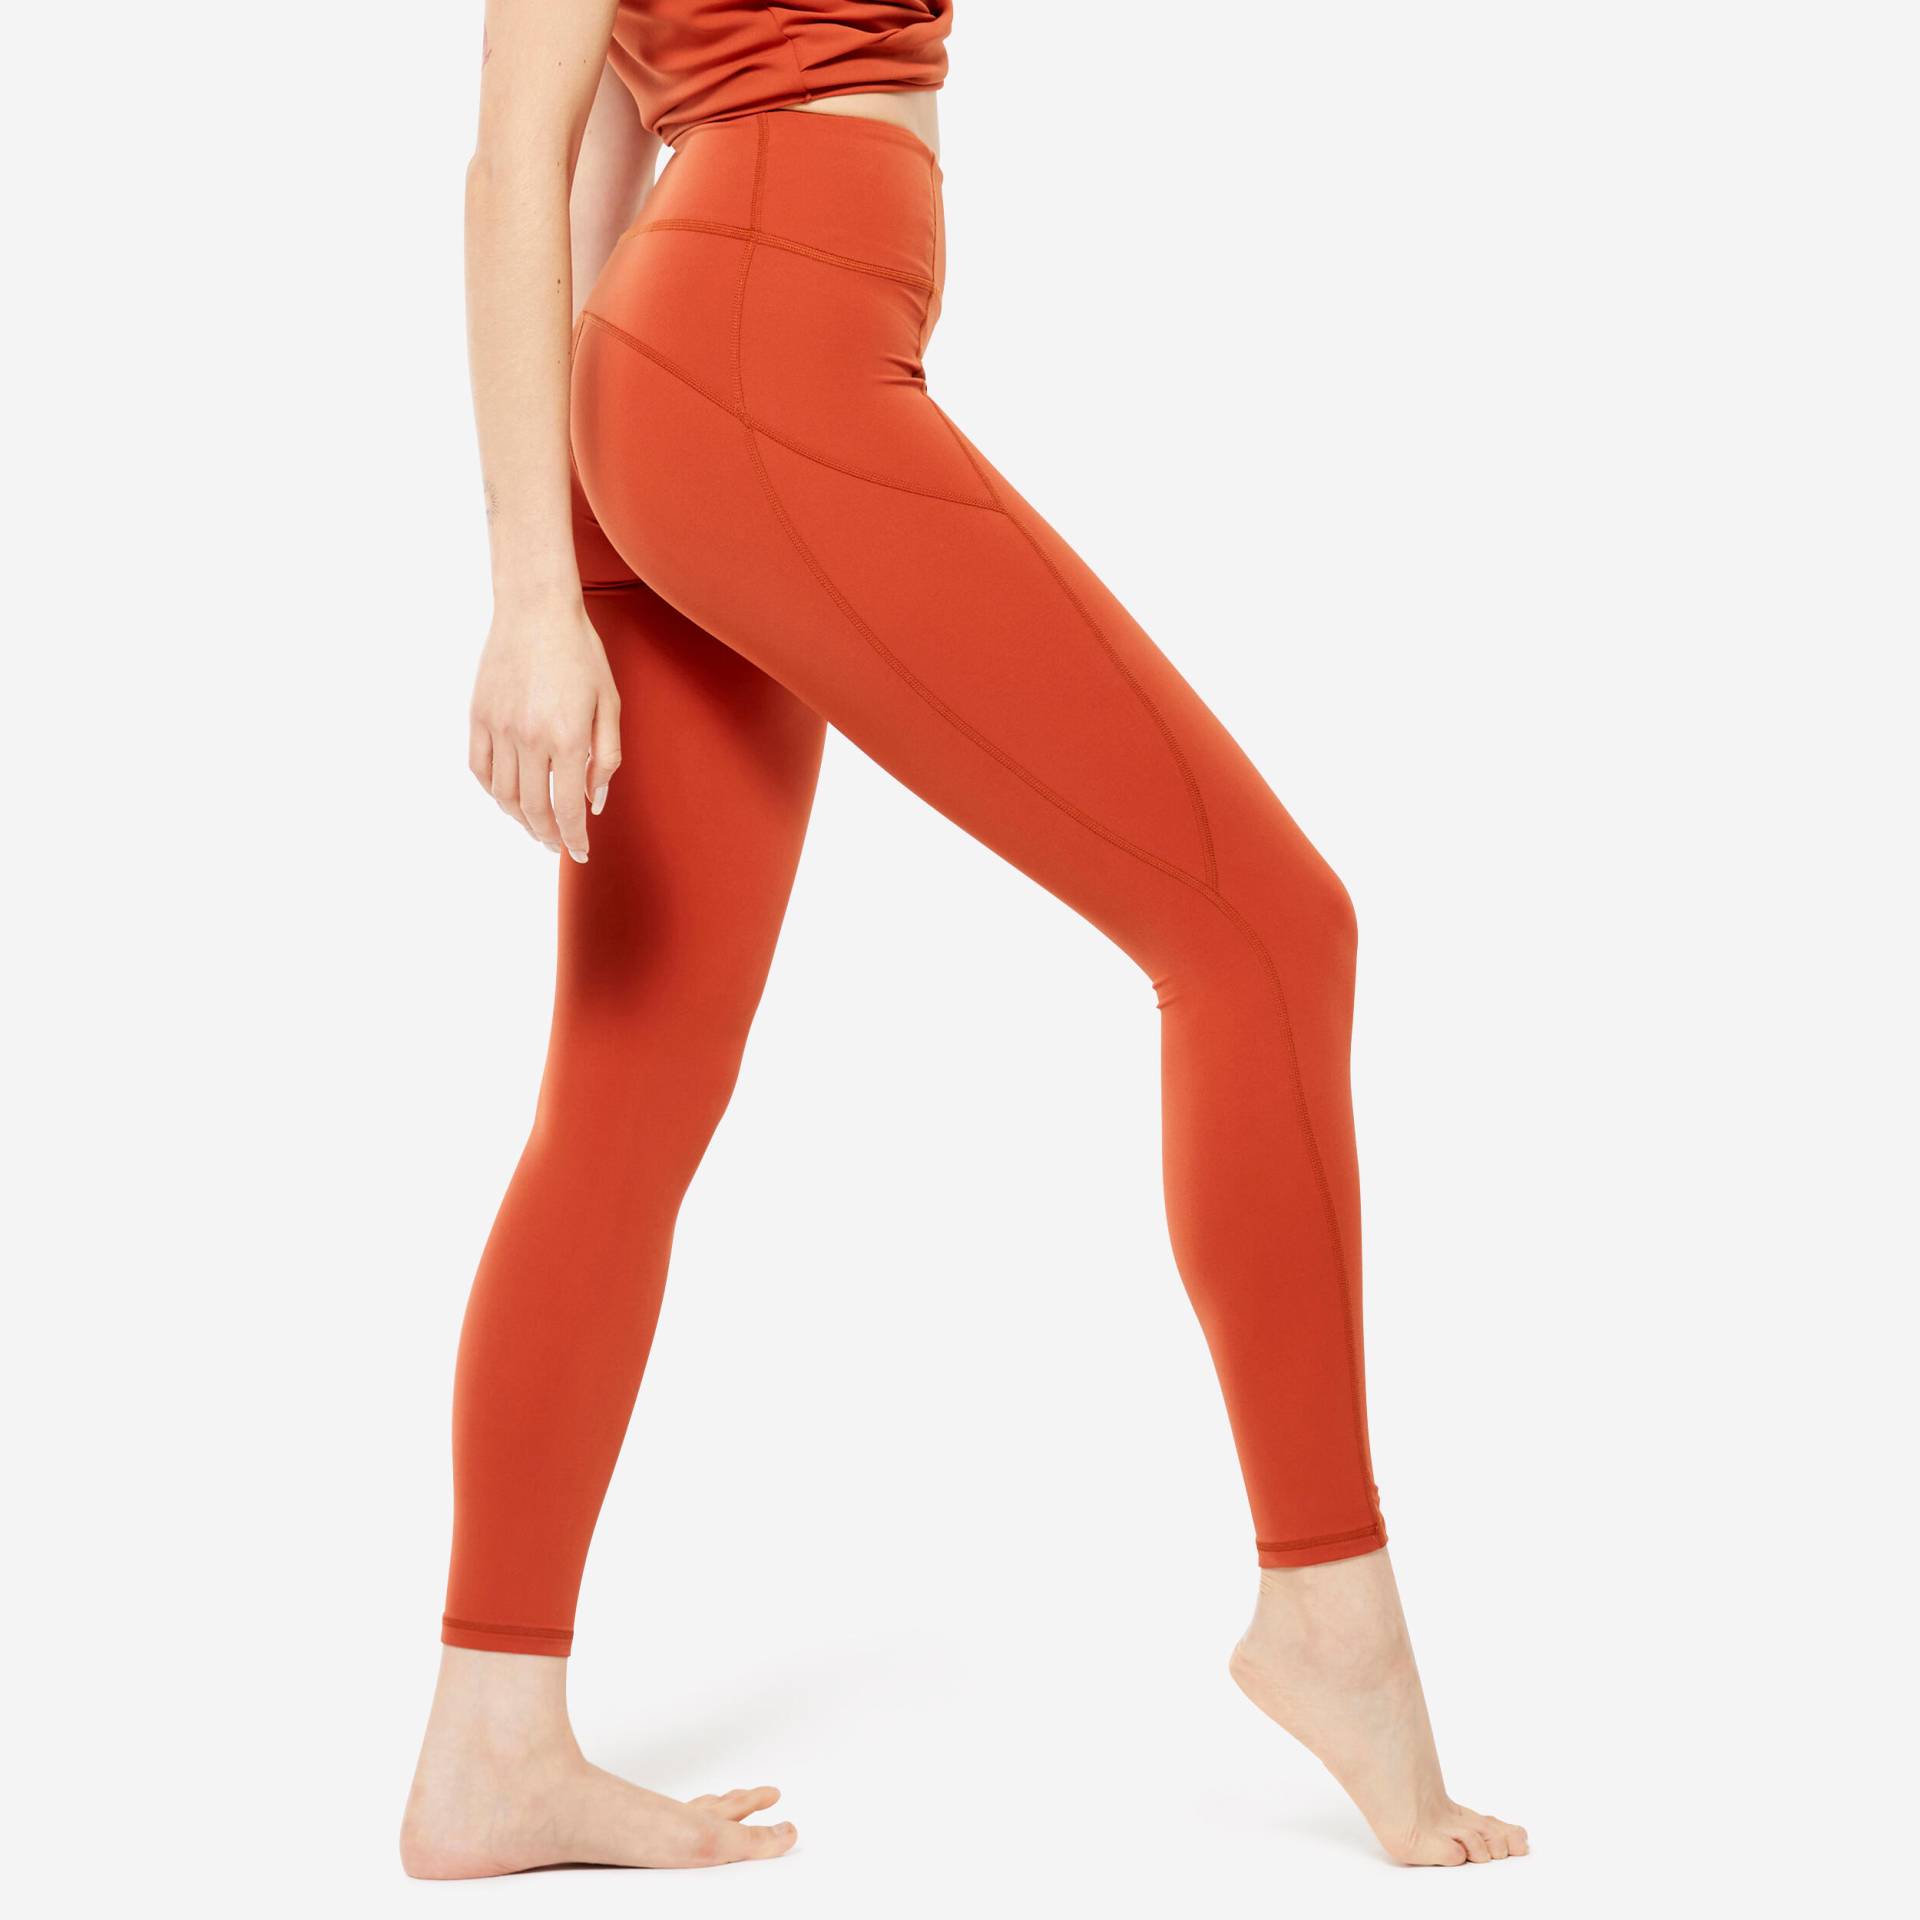 Leggings Yoga - Premium mahagoni von KIMJALY